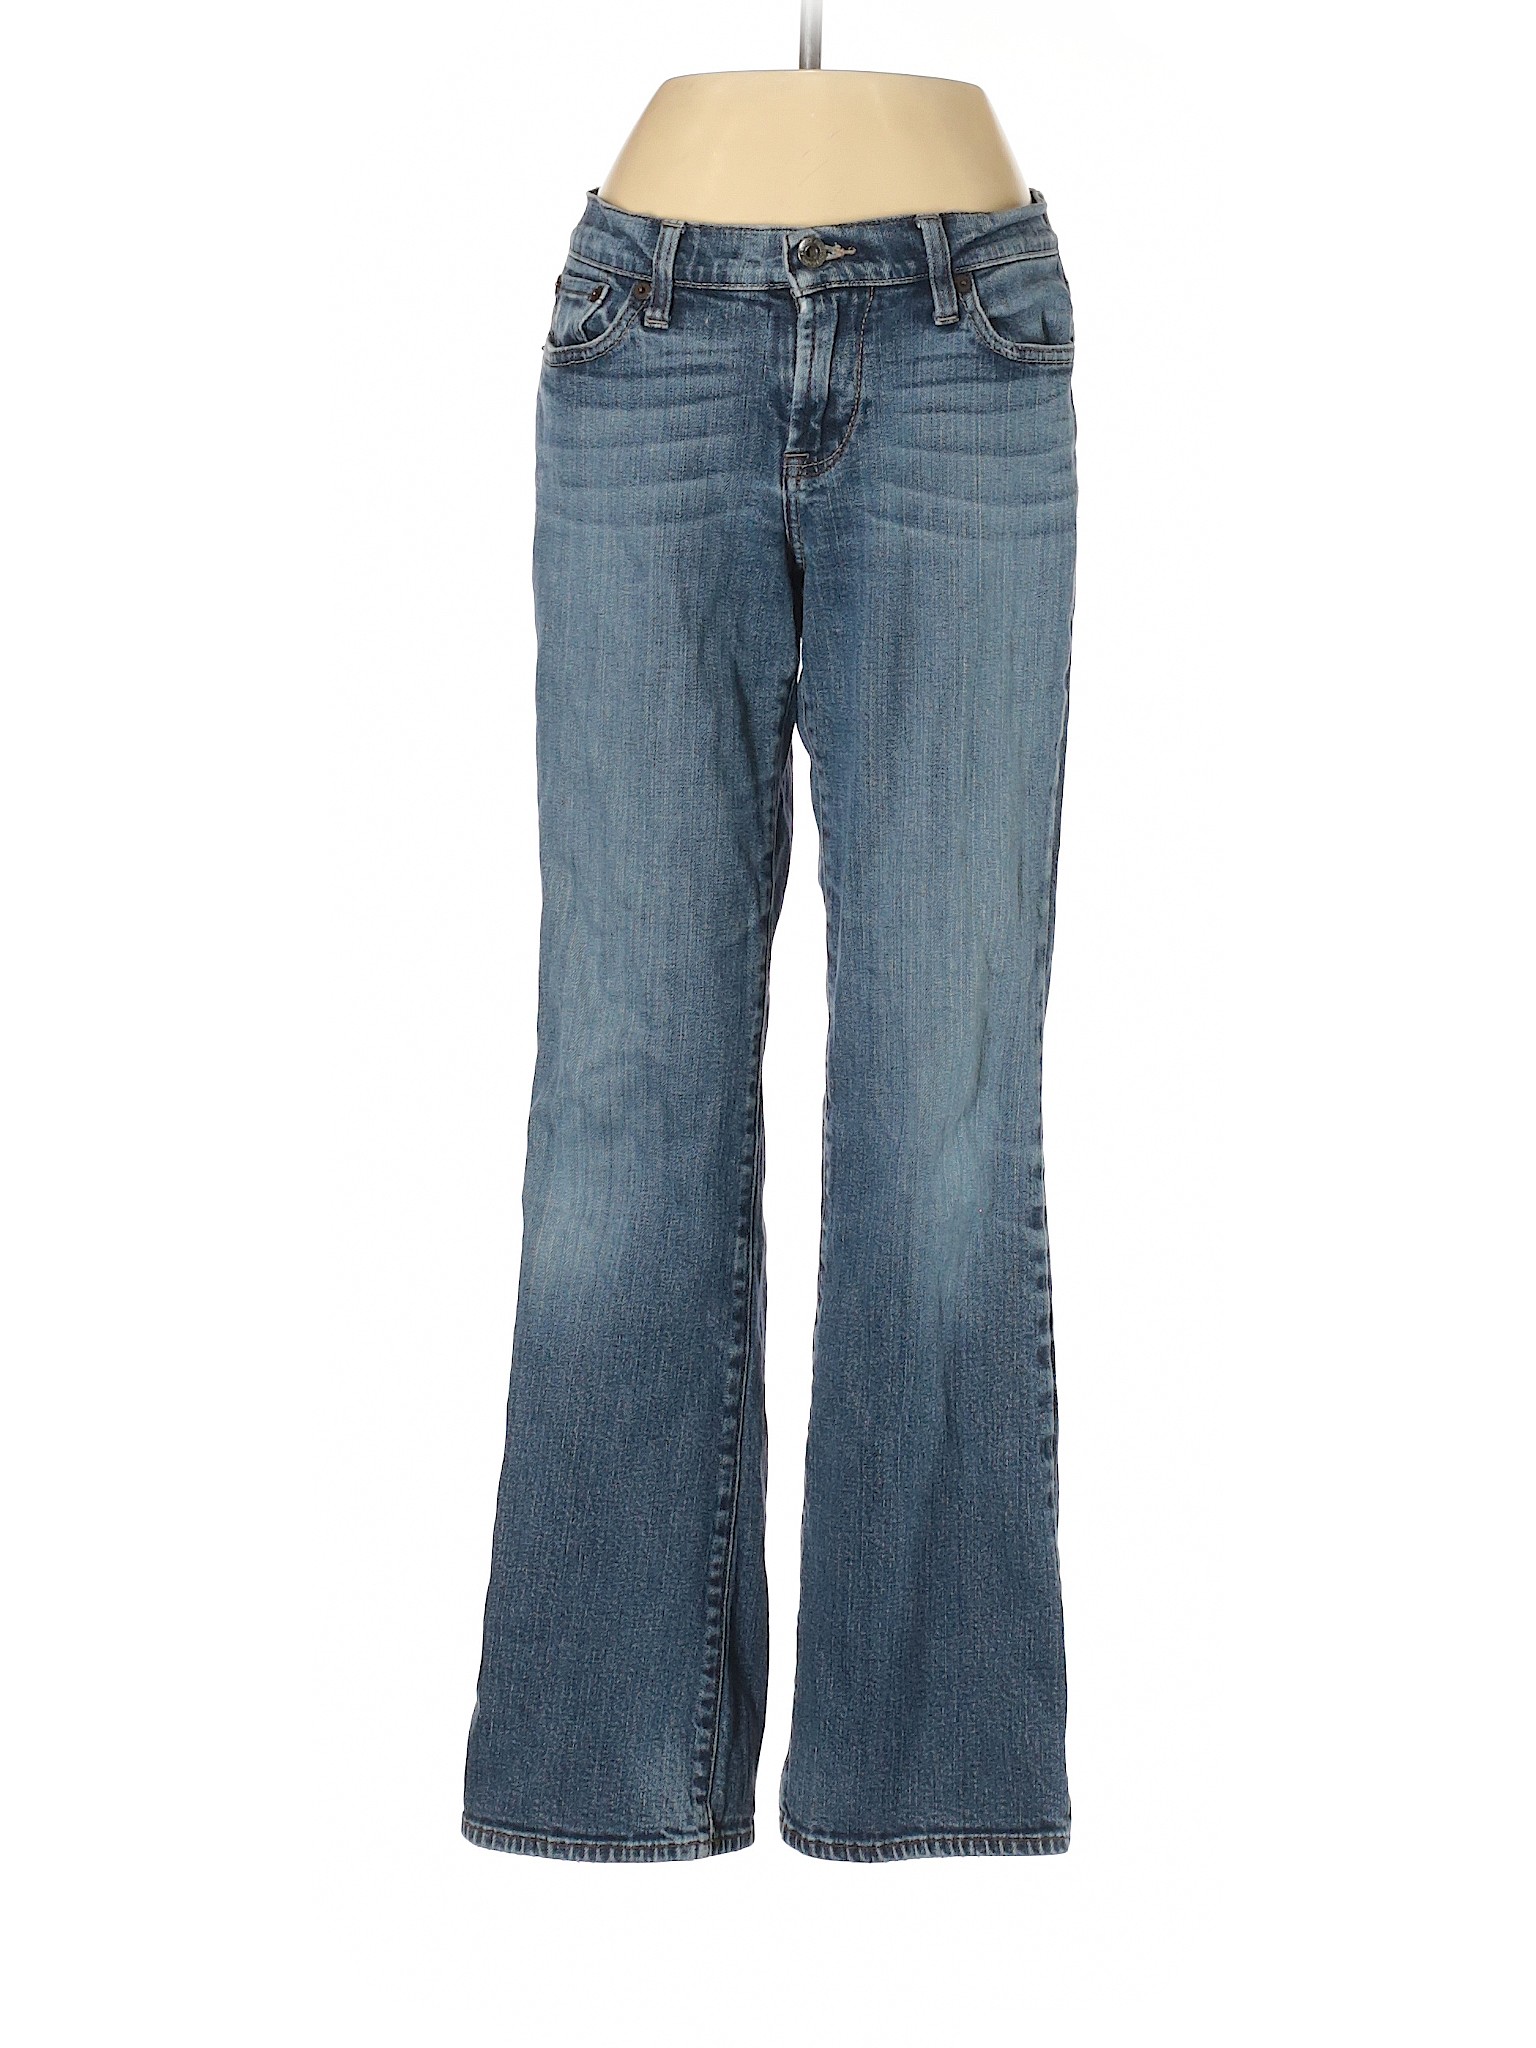 Lucky Brand Women Blue Jeans 4 | eBay